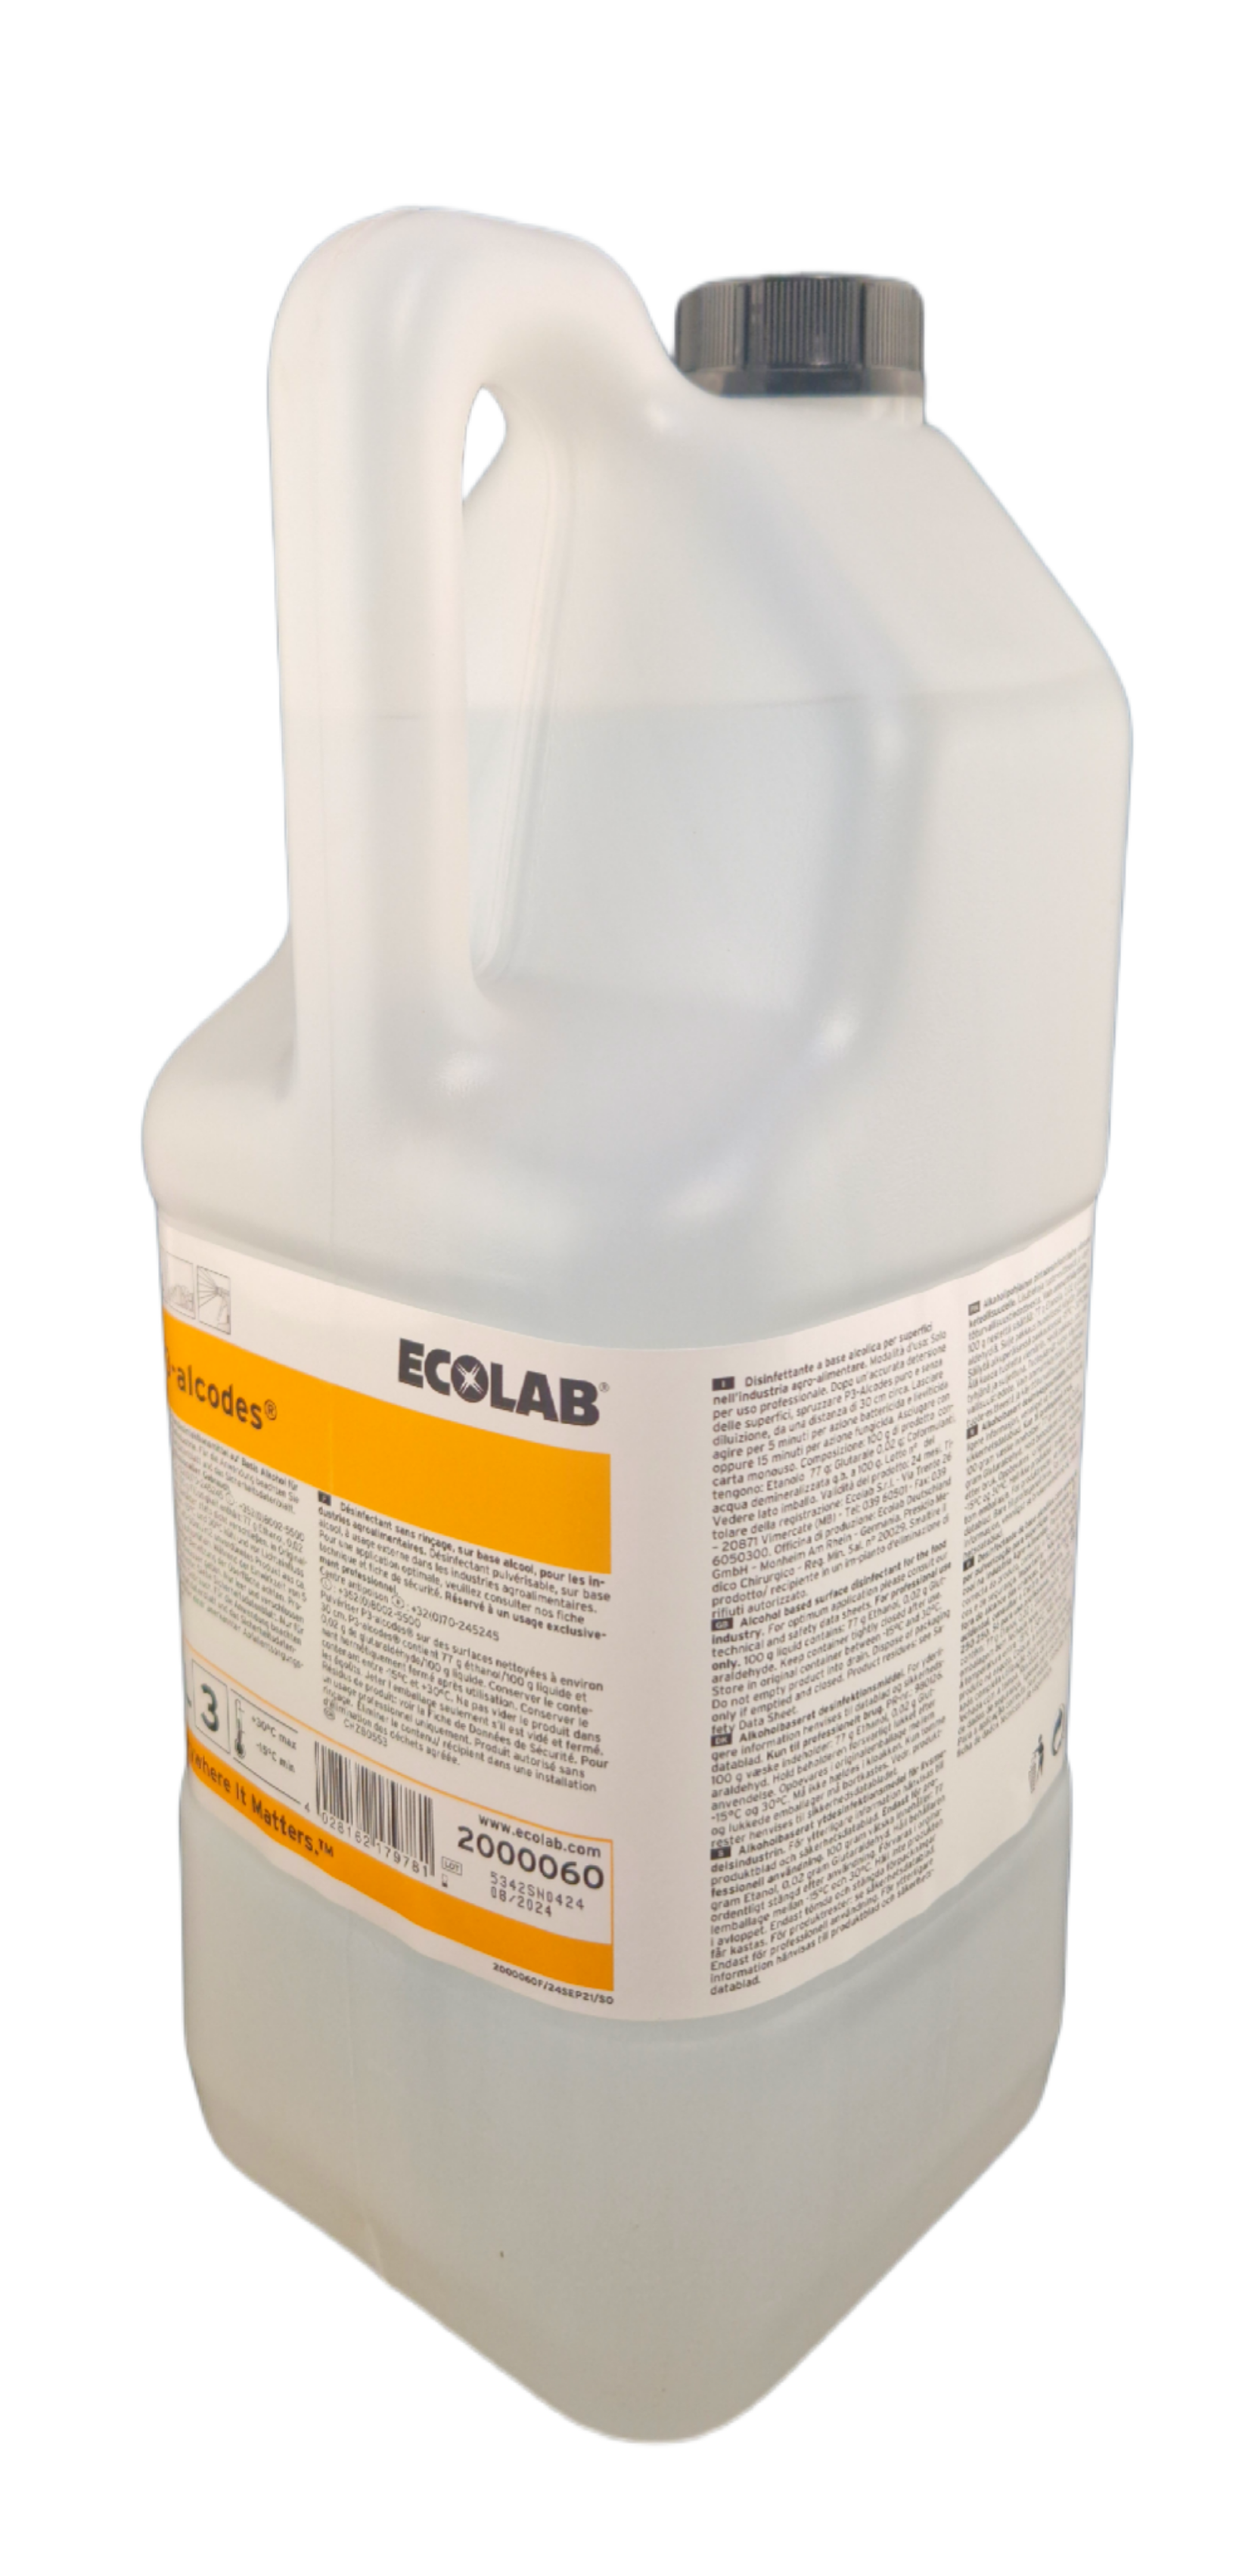 Ecolab - P3-alcodes 5 Liter